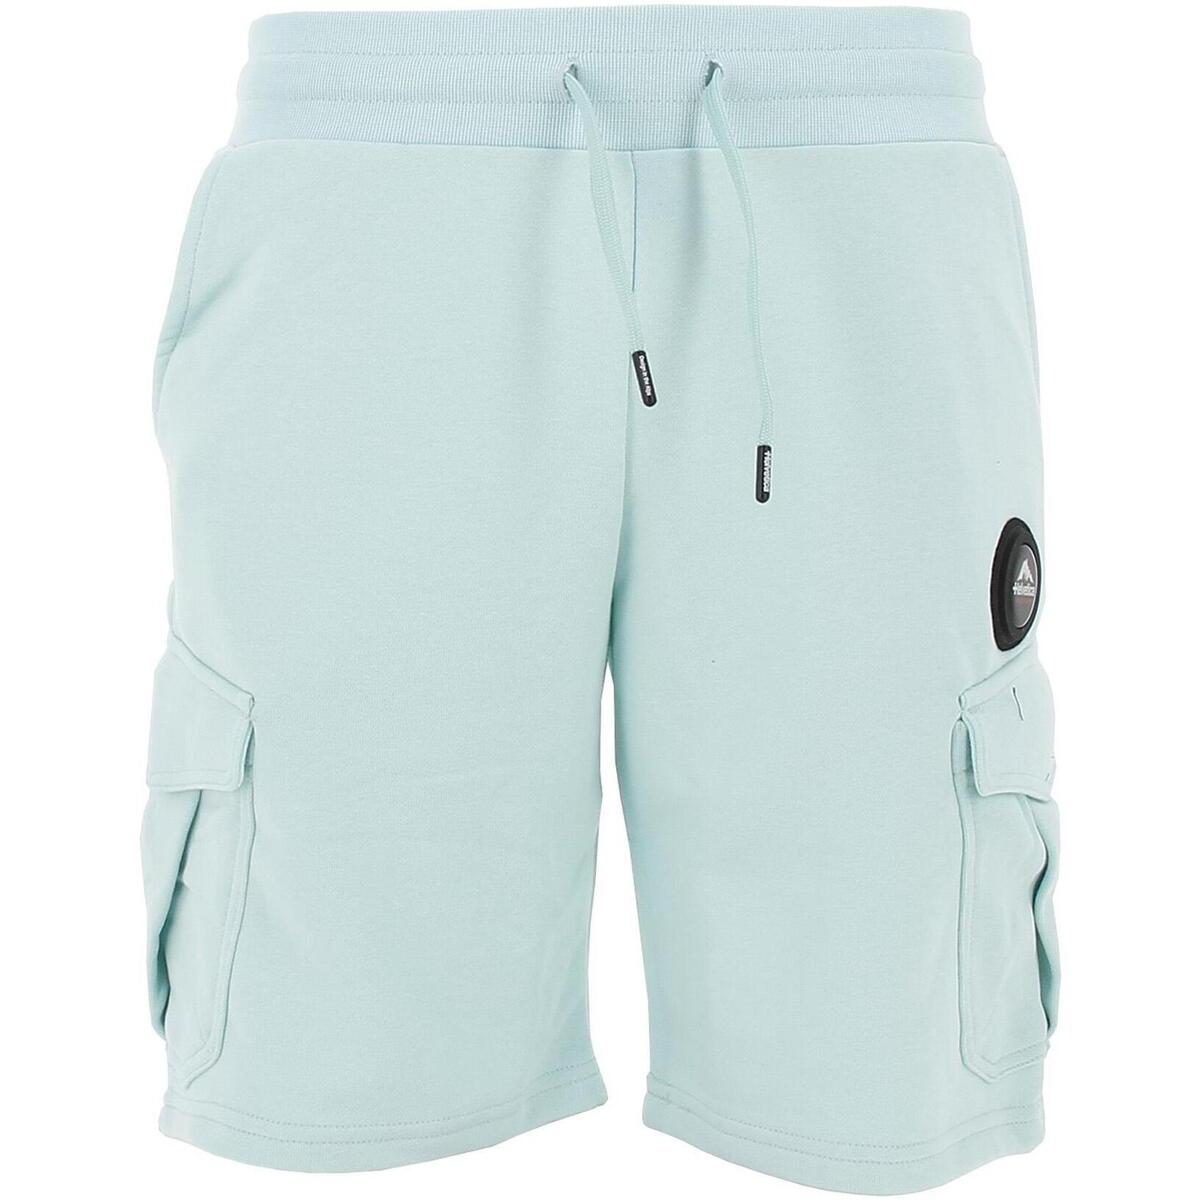 Vêtements Homme Shorts / Bermudas Helvetica Short a poche Vert